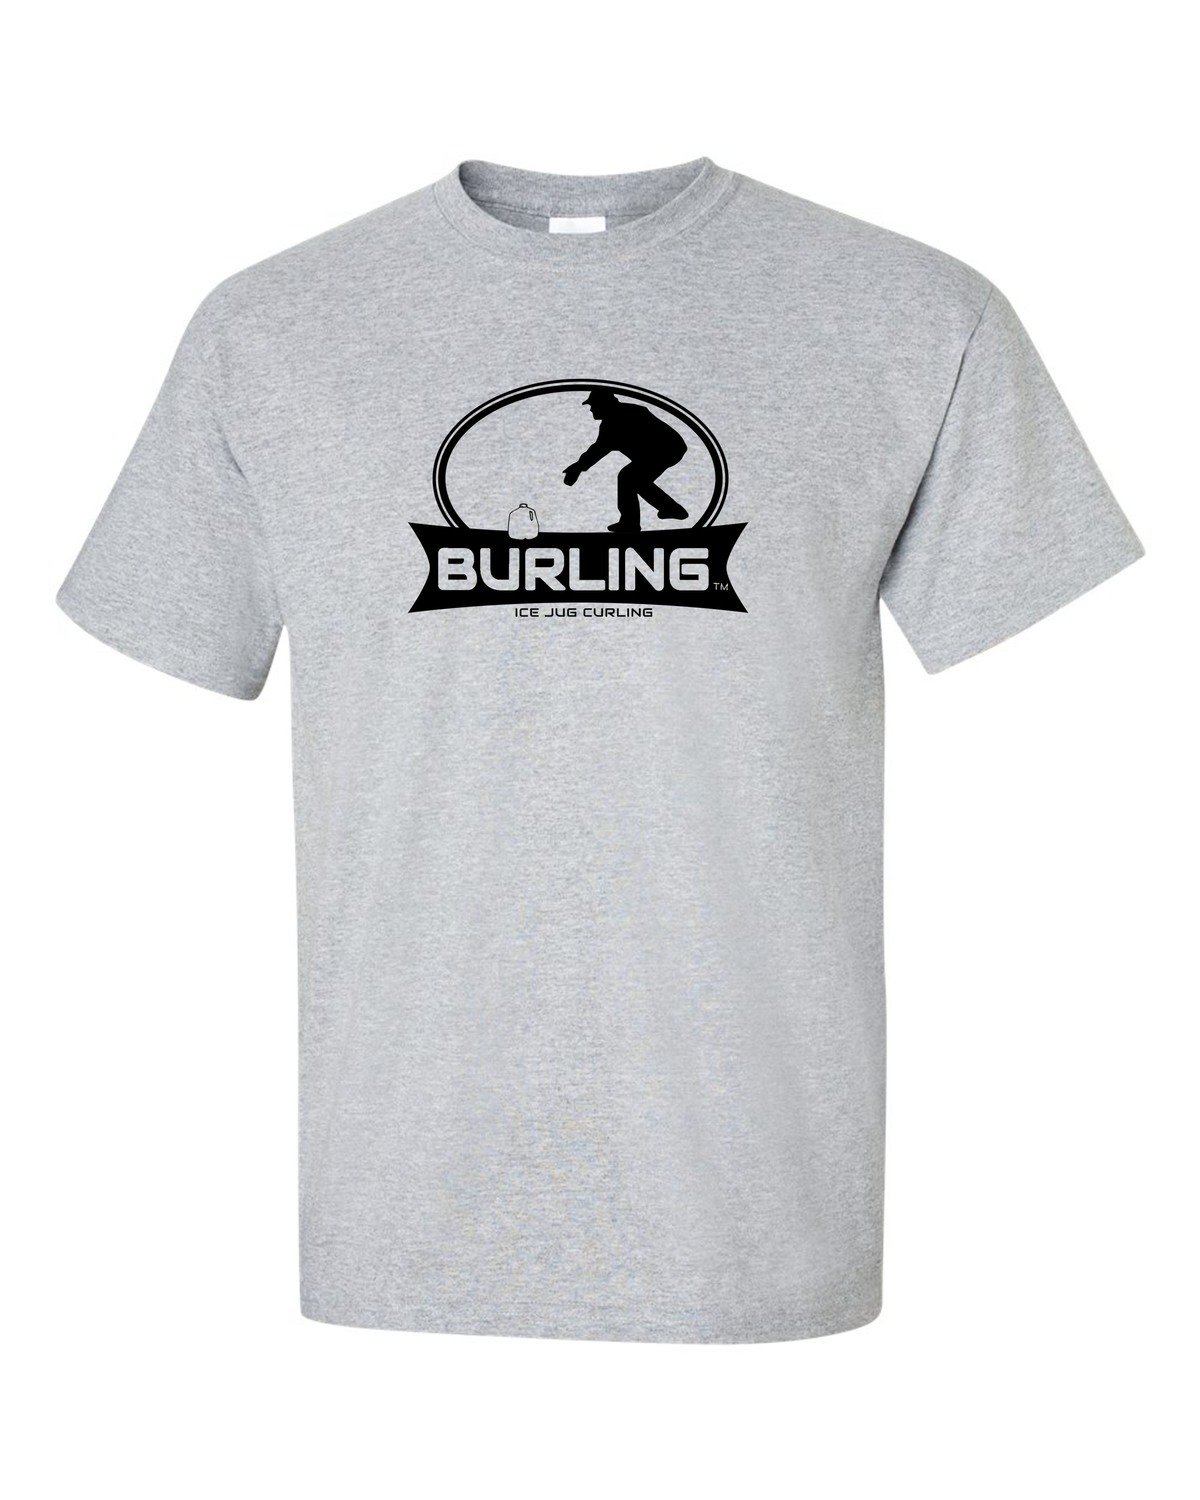 Burling Mens Grey T-shirt